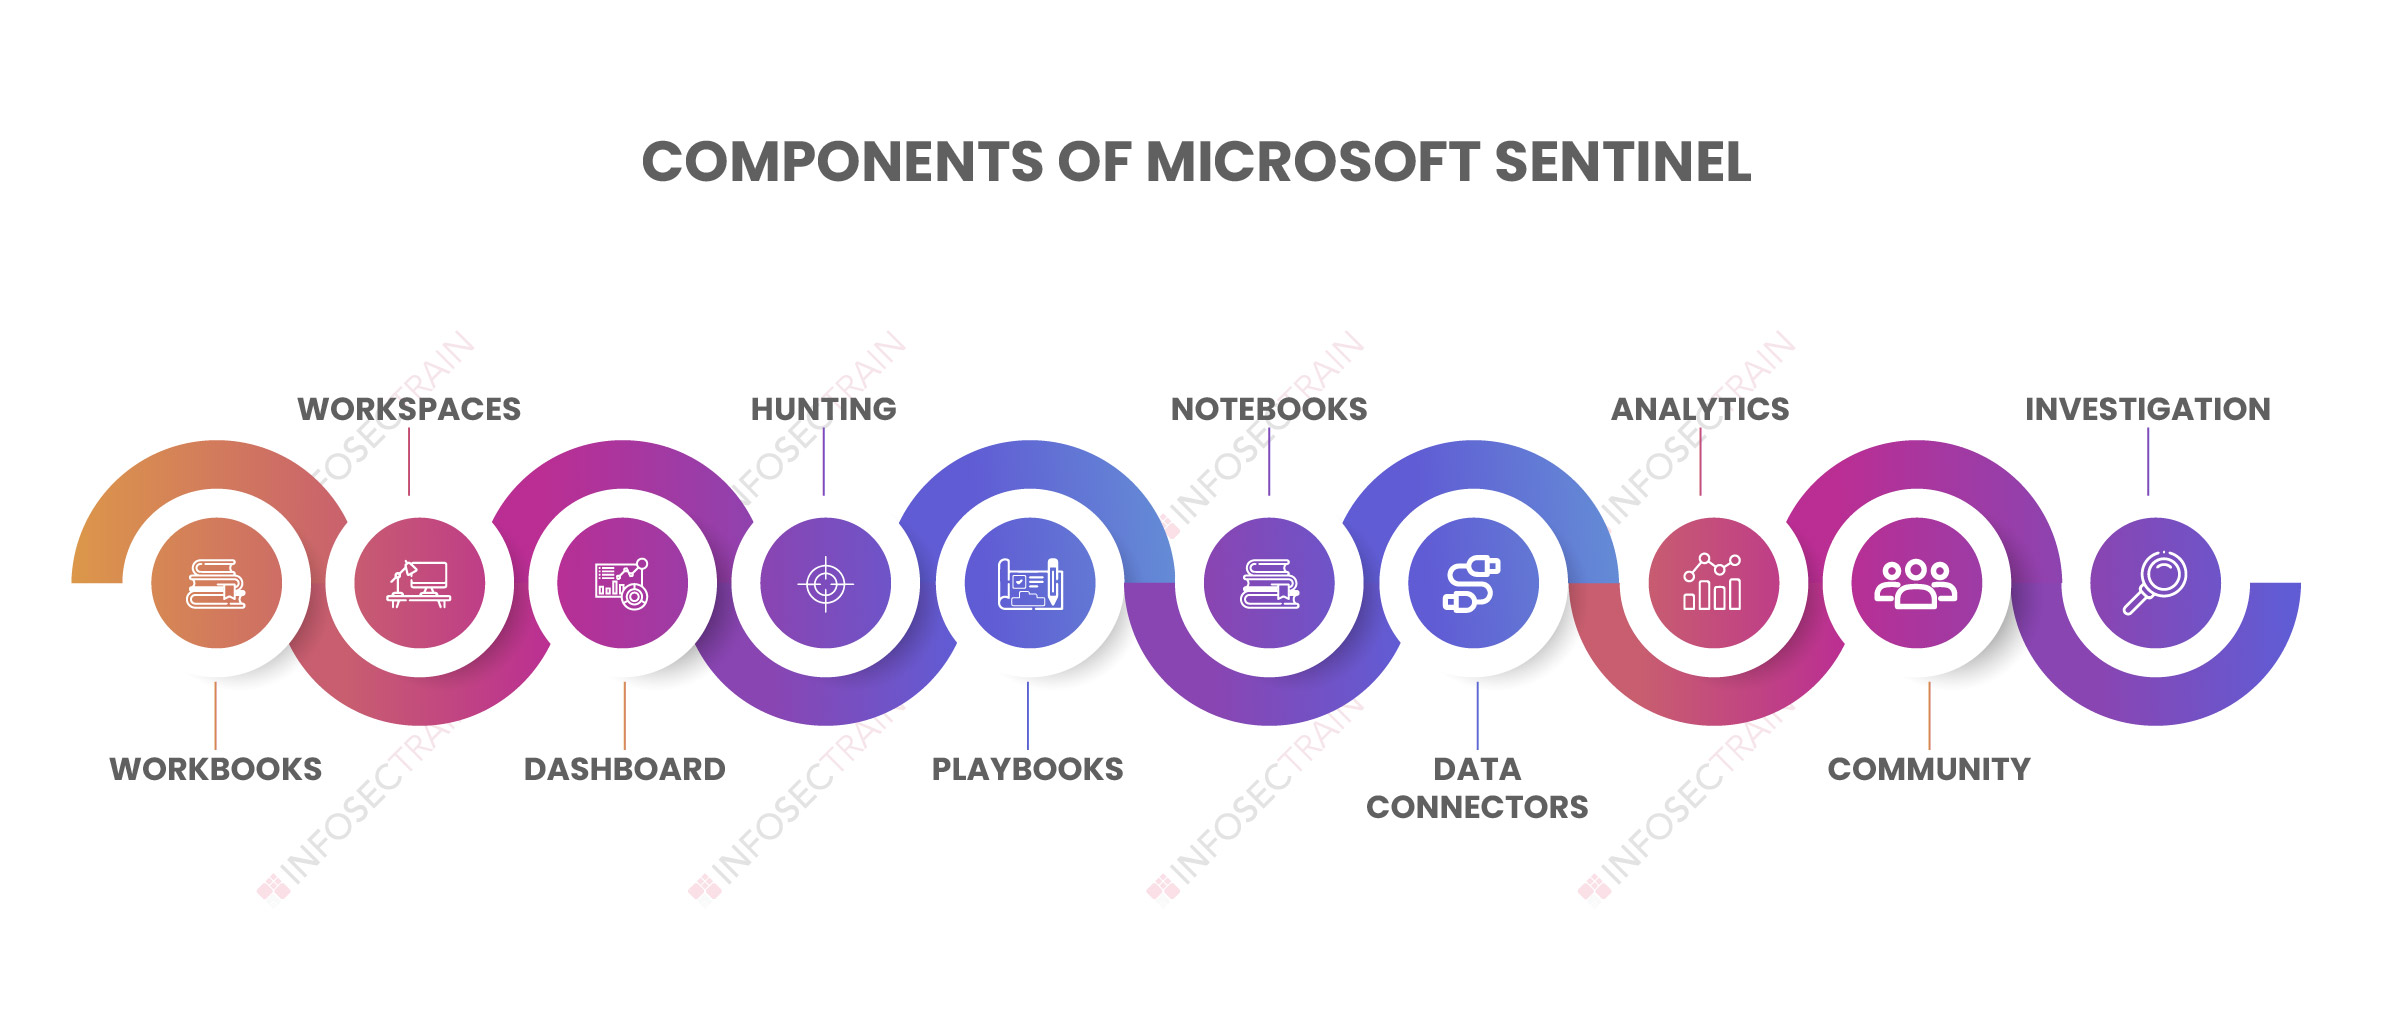 Components of Microsoft Sentinel